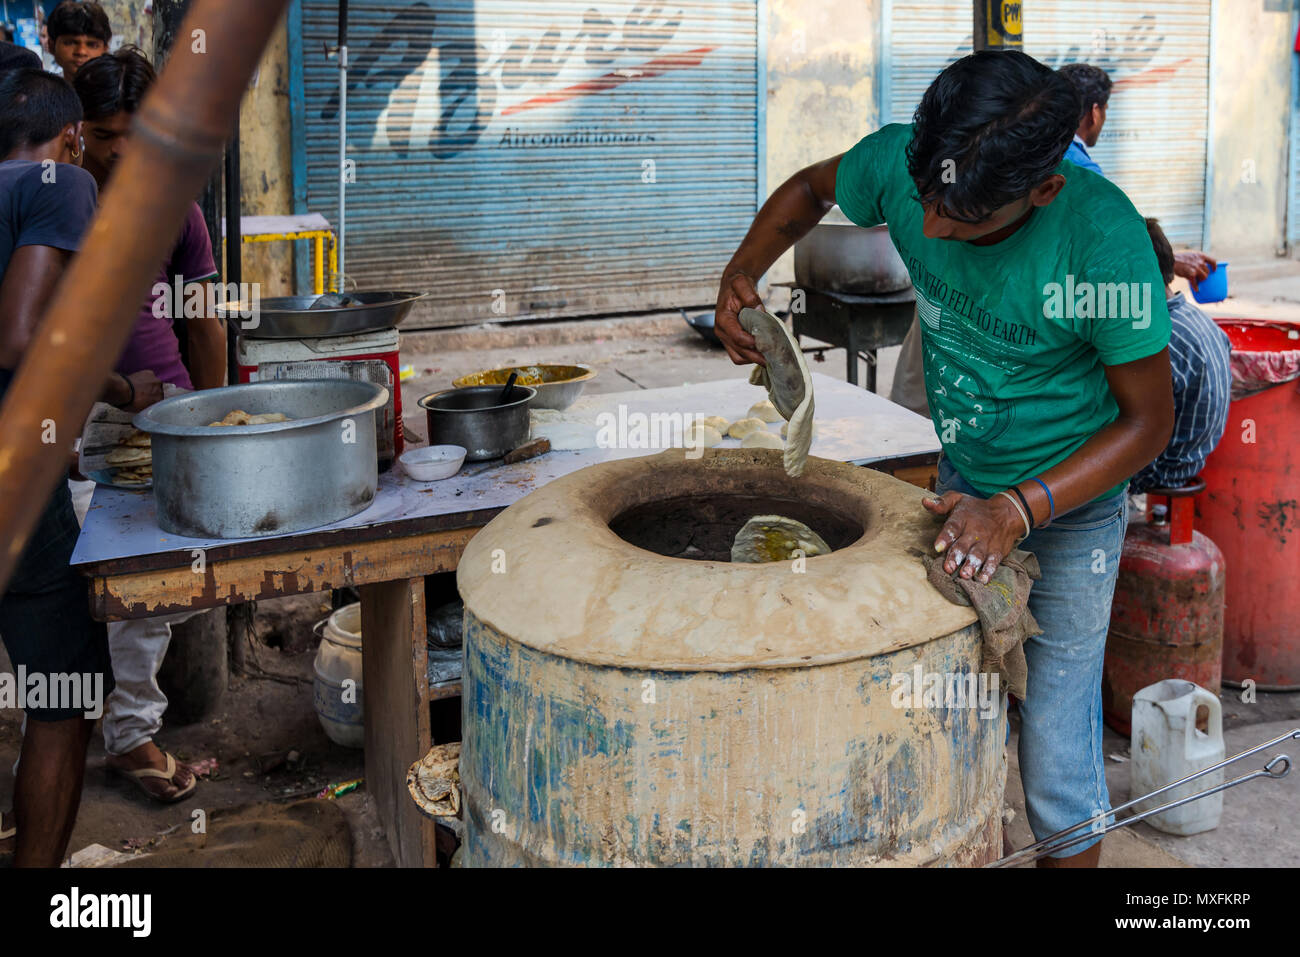 Street vendor makes Indian naan bread in the oven, tandoori .India Delhi June 2015 Stock Photo